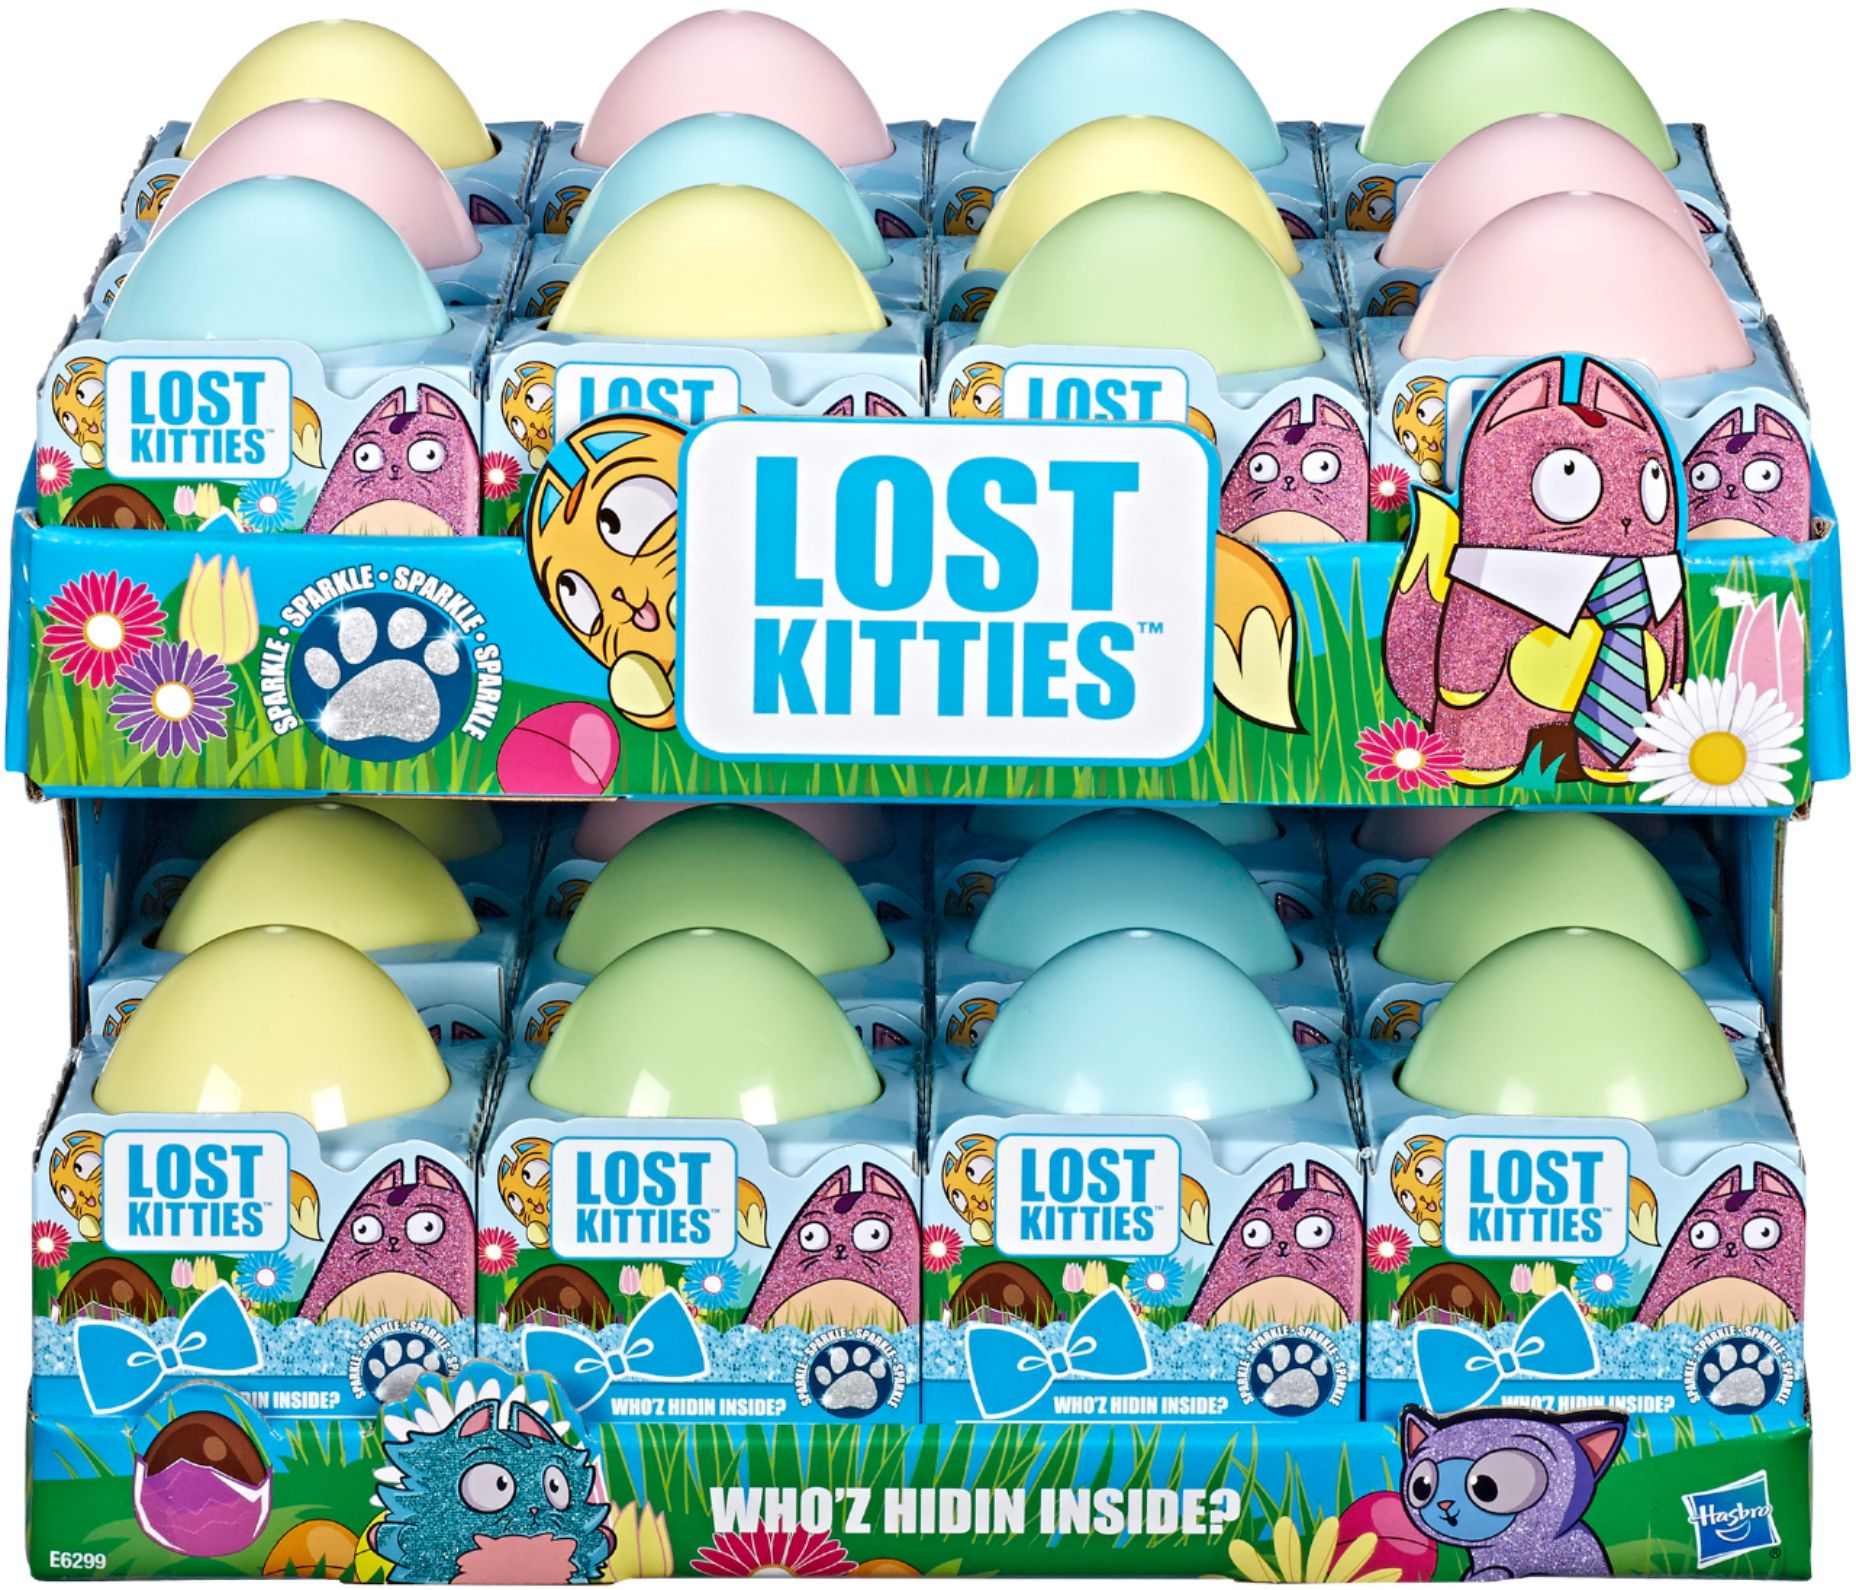 Best Buy: Hasbro Lost Kitties figure Blind Box E4459